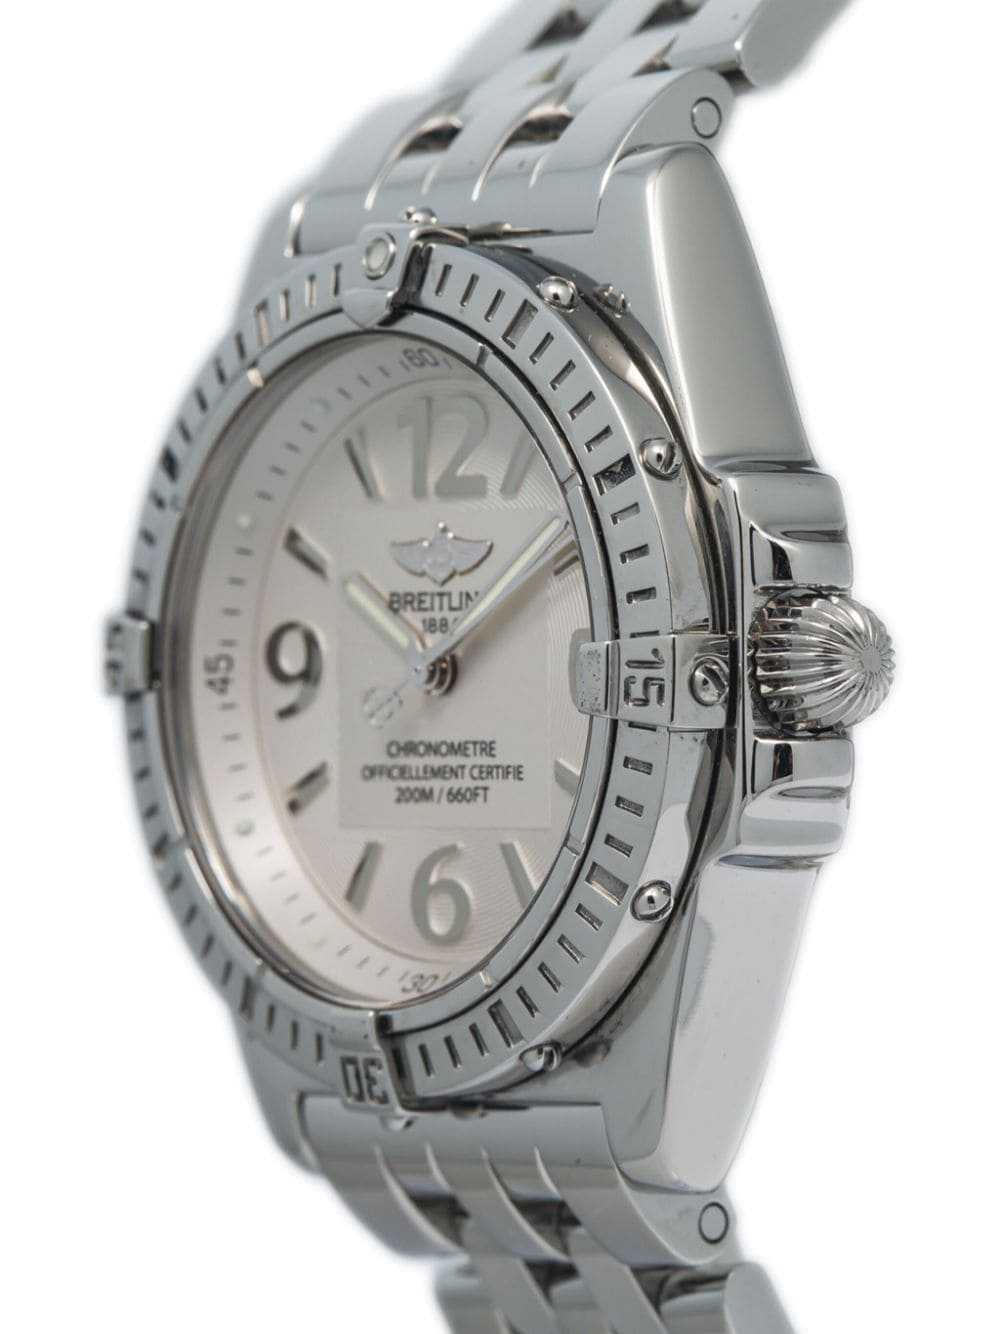 Breitling pre-owned Chronometre 34mm - White - image 2